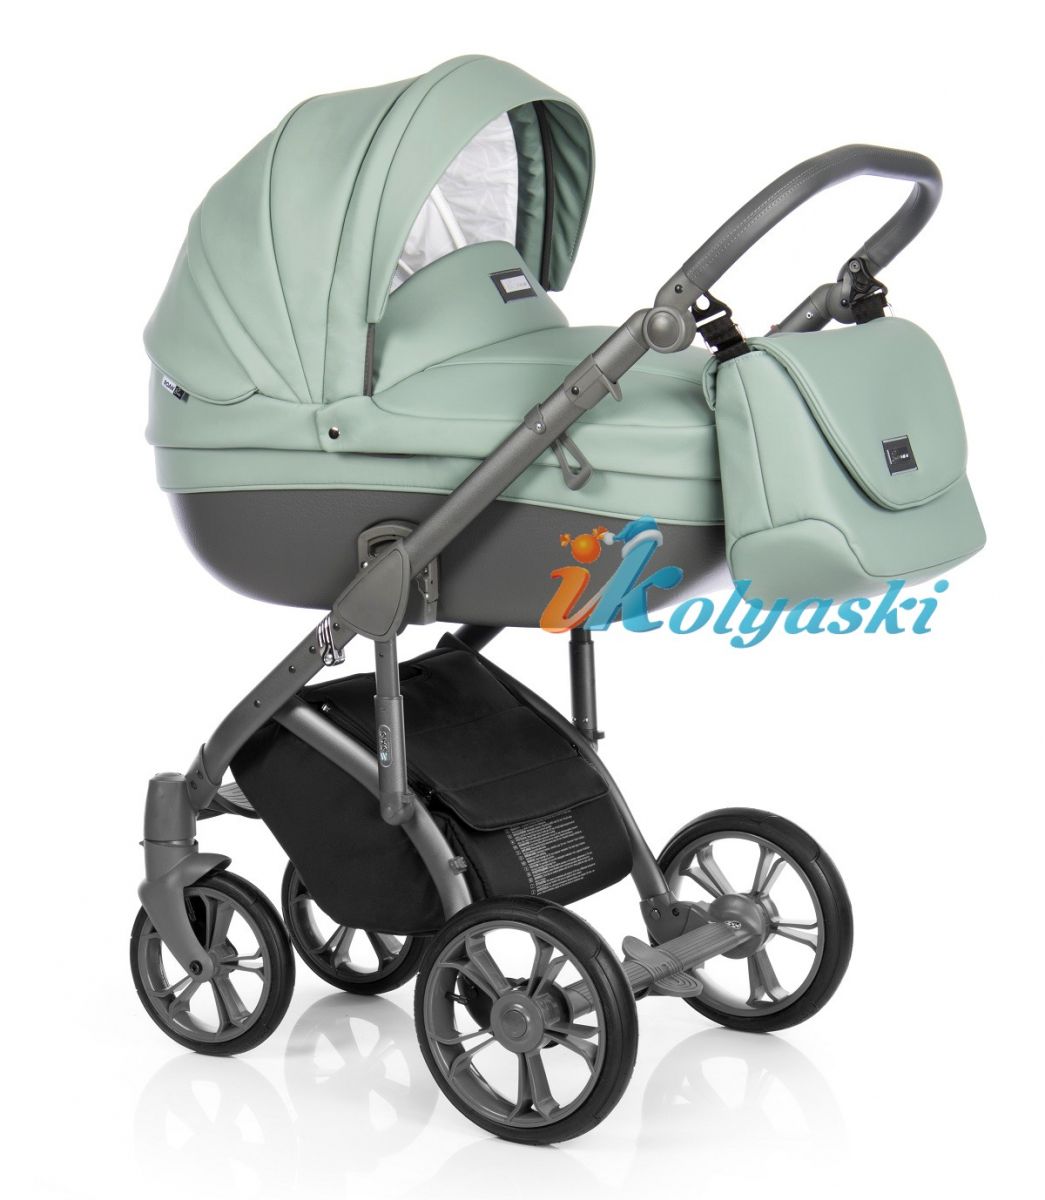 Roan Bass Soft Misty Mint Eco-Leather коляска для новорожденных новинка